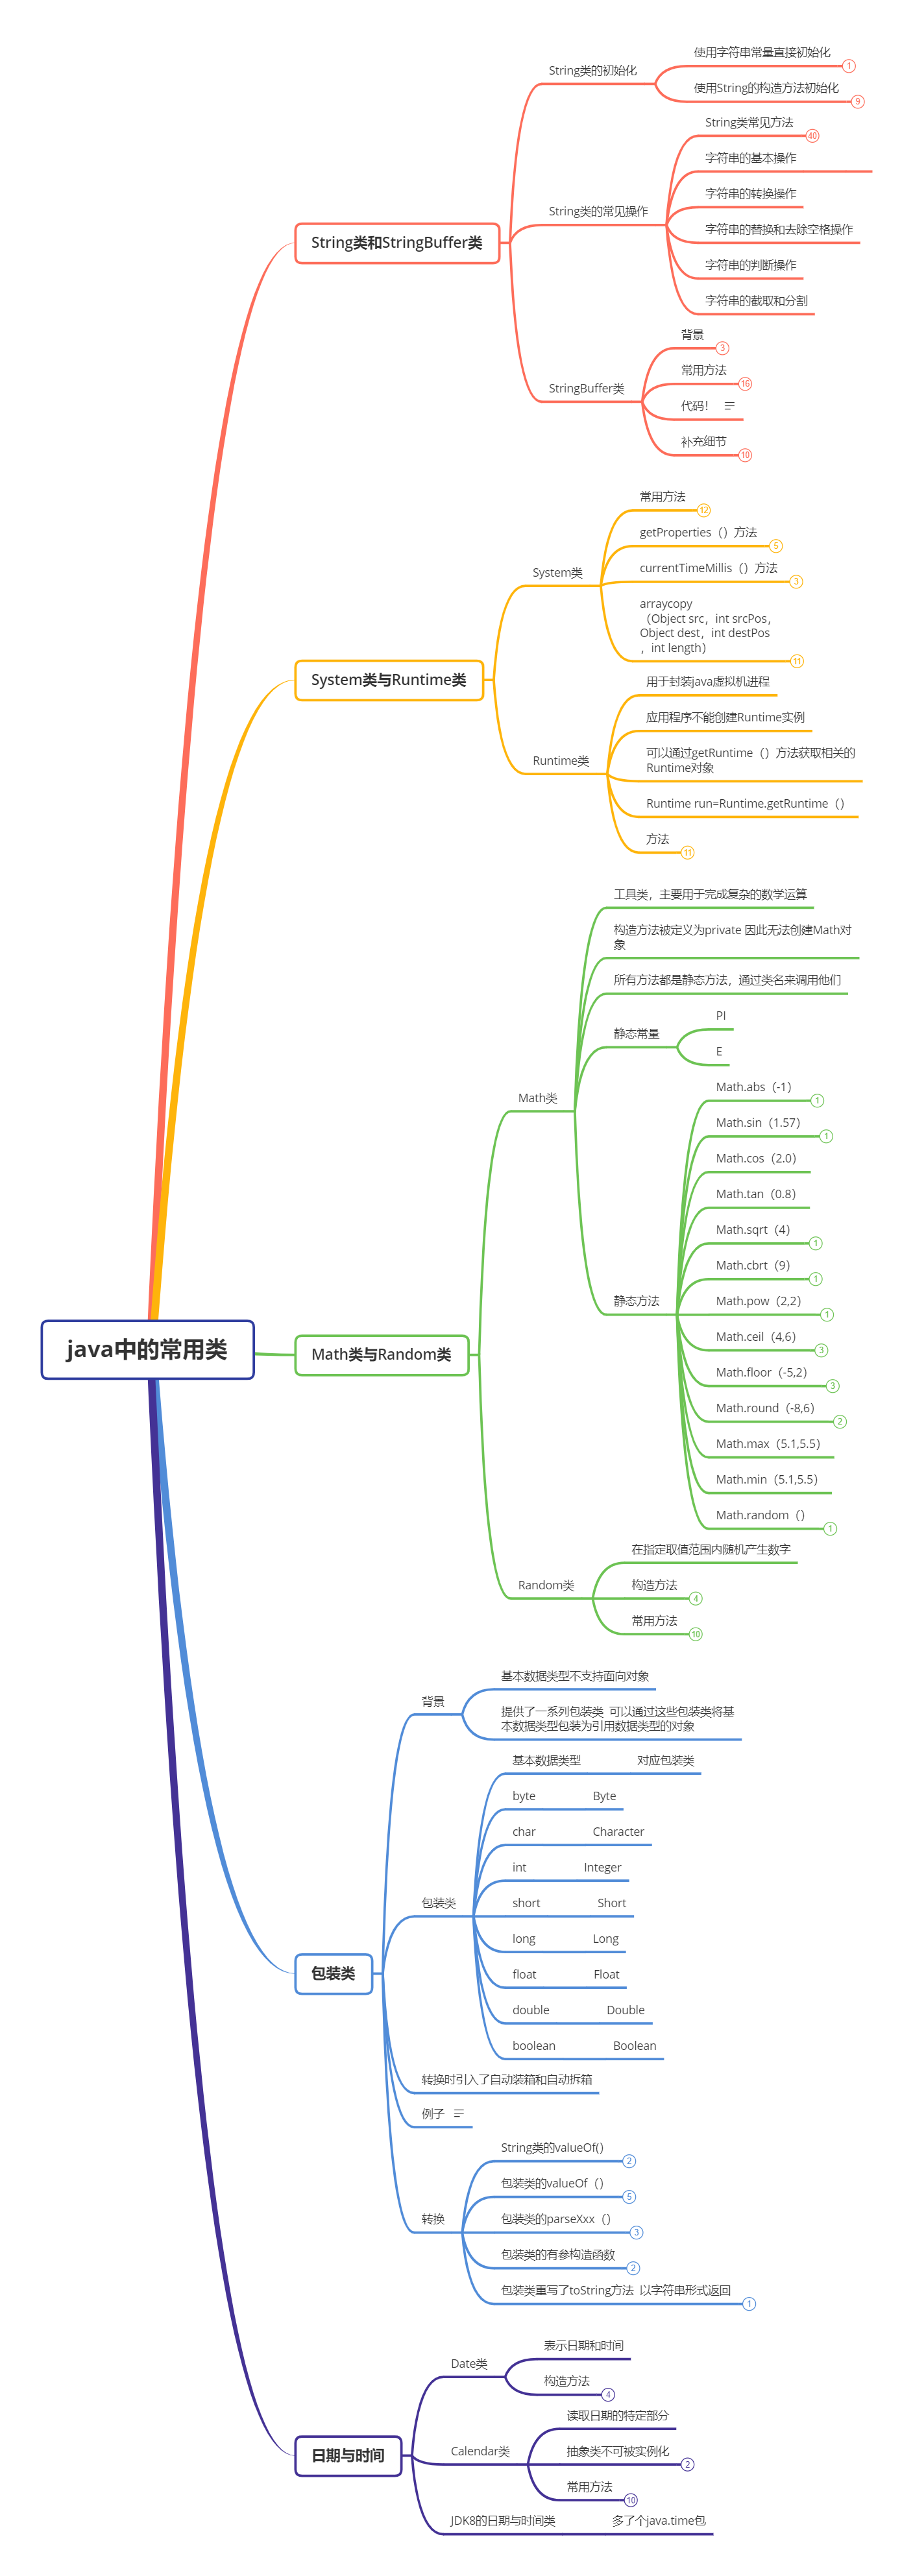 Java常用类及补充类思维导图（图）